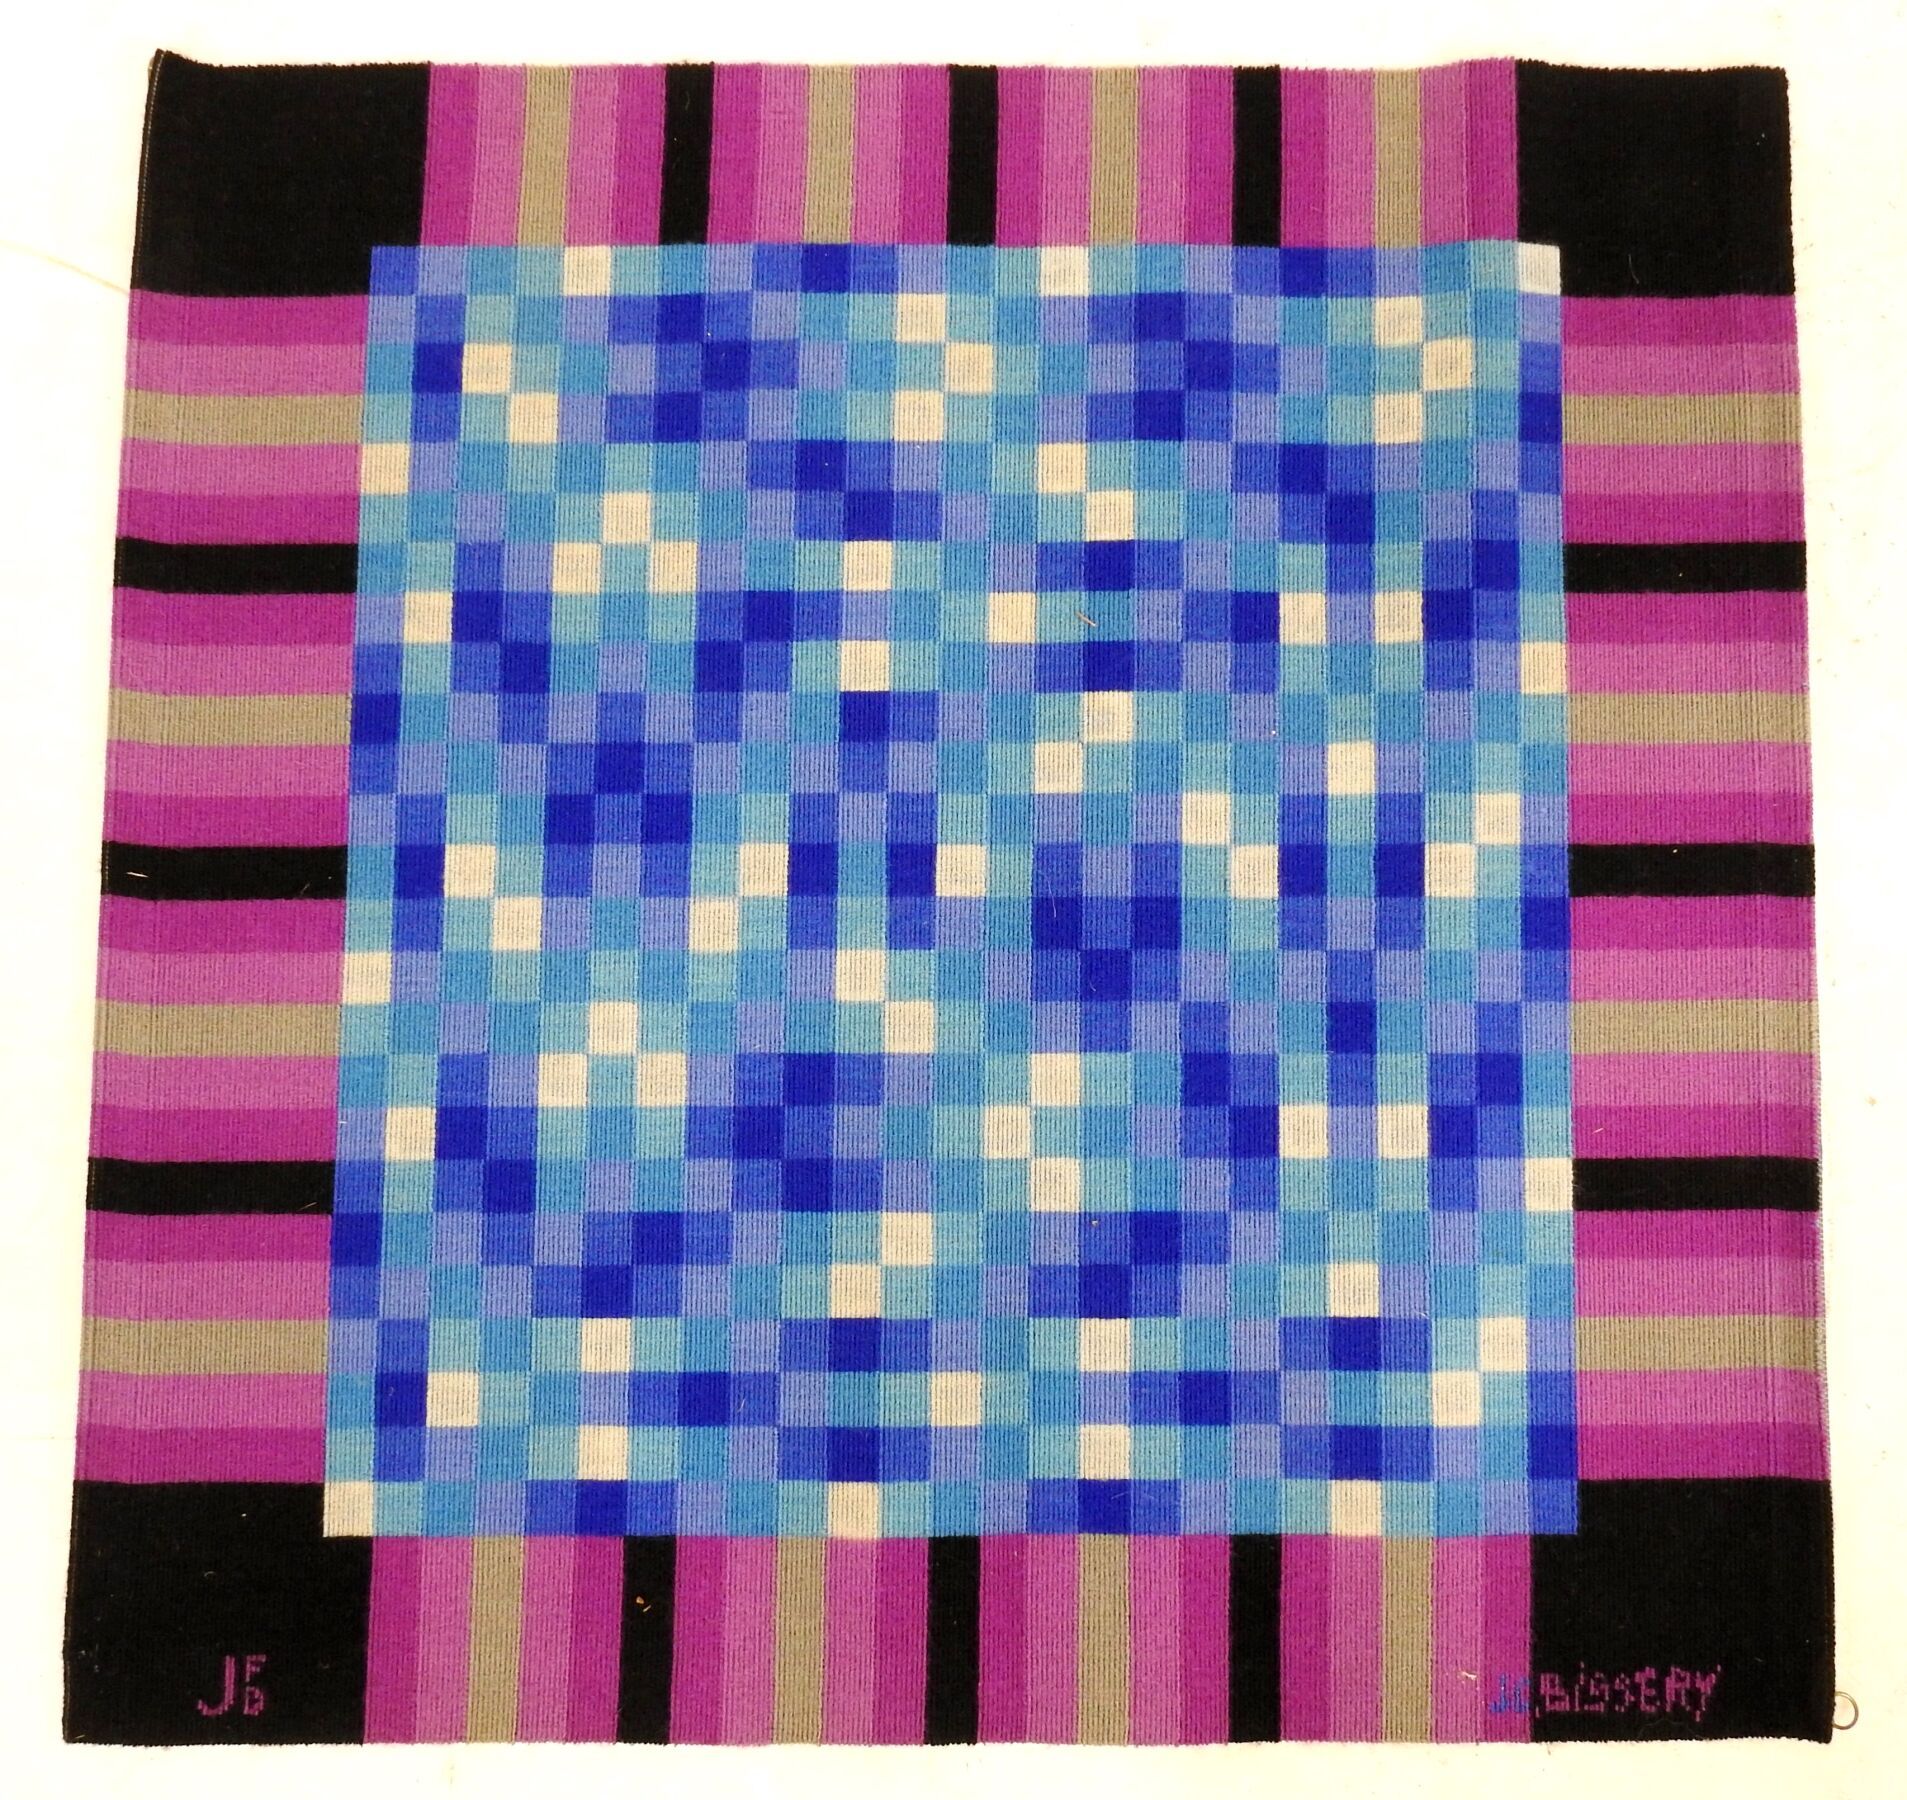 Null Jean-Claude BISSERY (20岁)。多色羊毛的现代主义挂毯，装饰有深浅不一的蓝色和白色的棋盘，边框为紫色棋盘。右下方有签名。由JFD工&hellip;